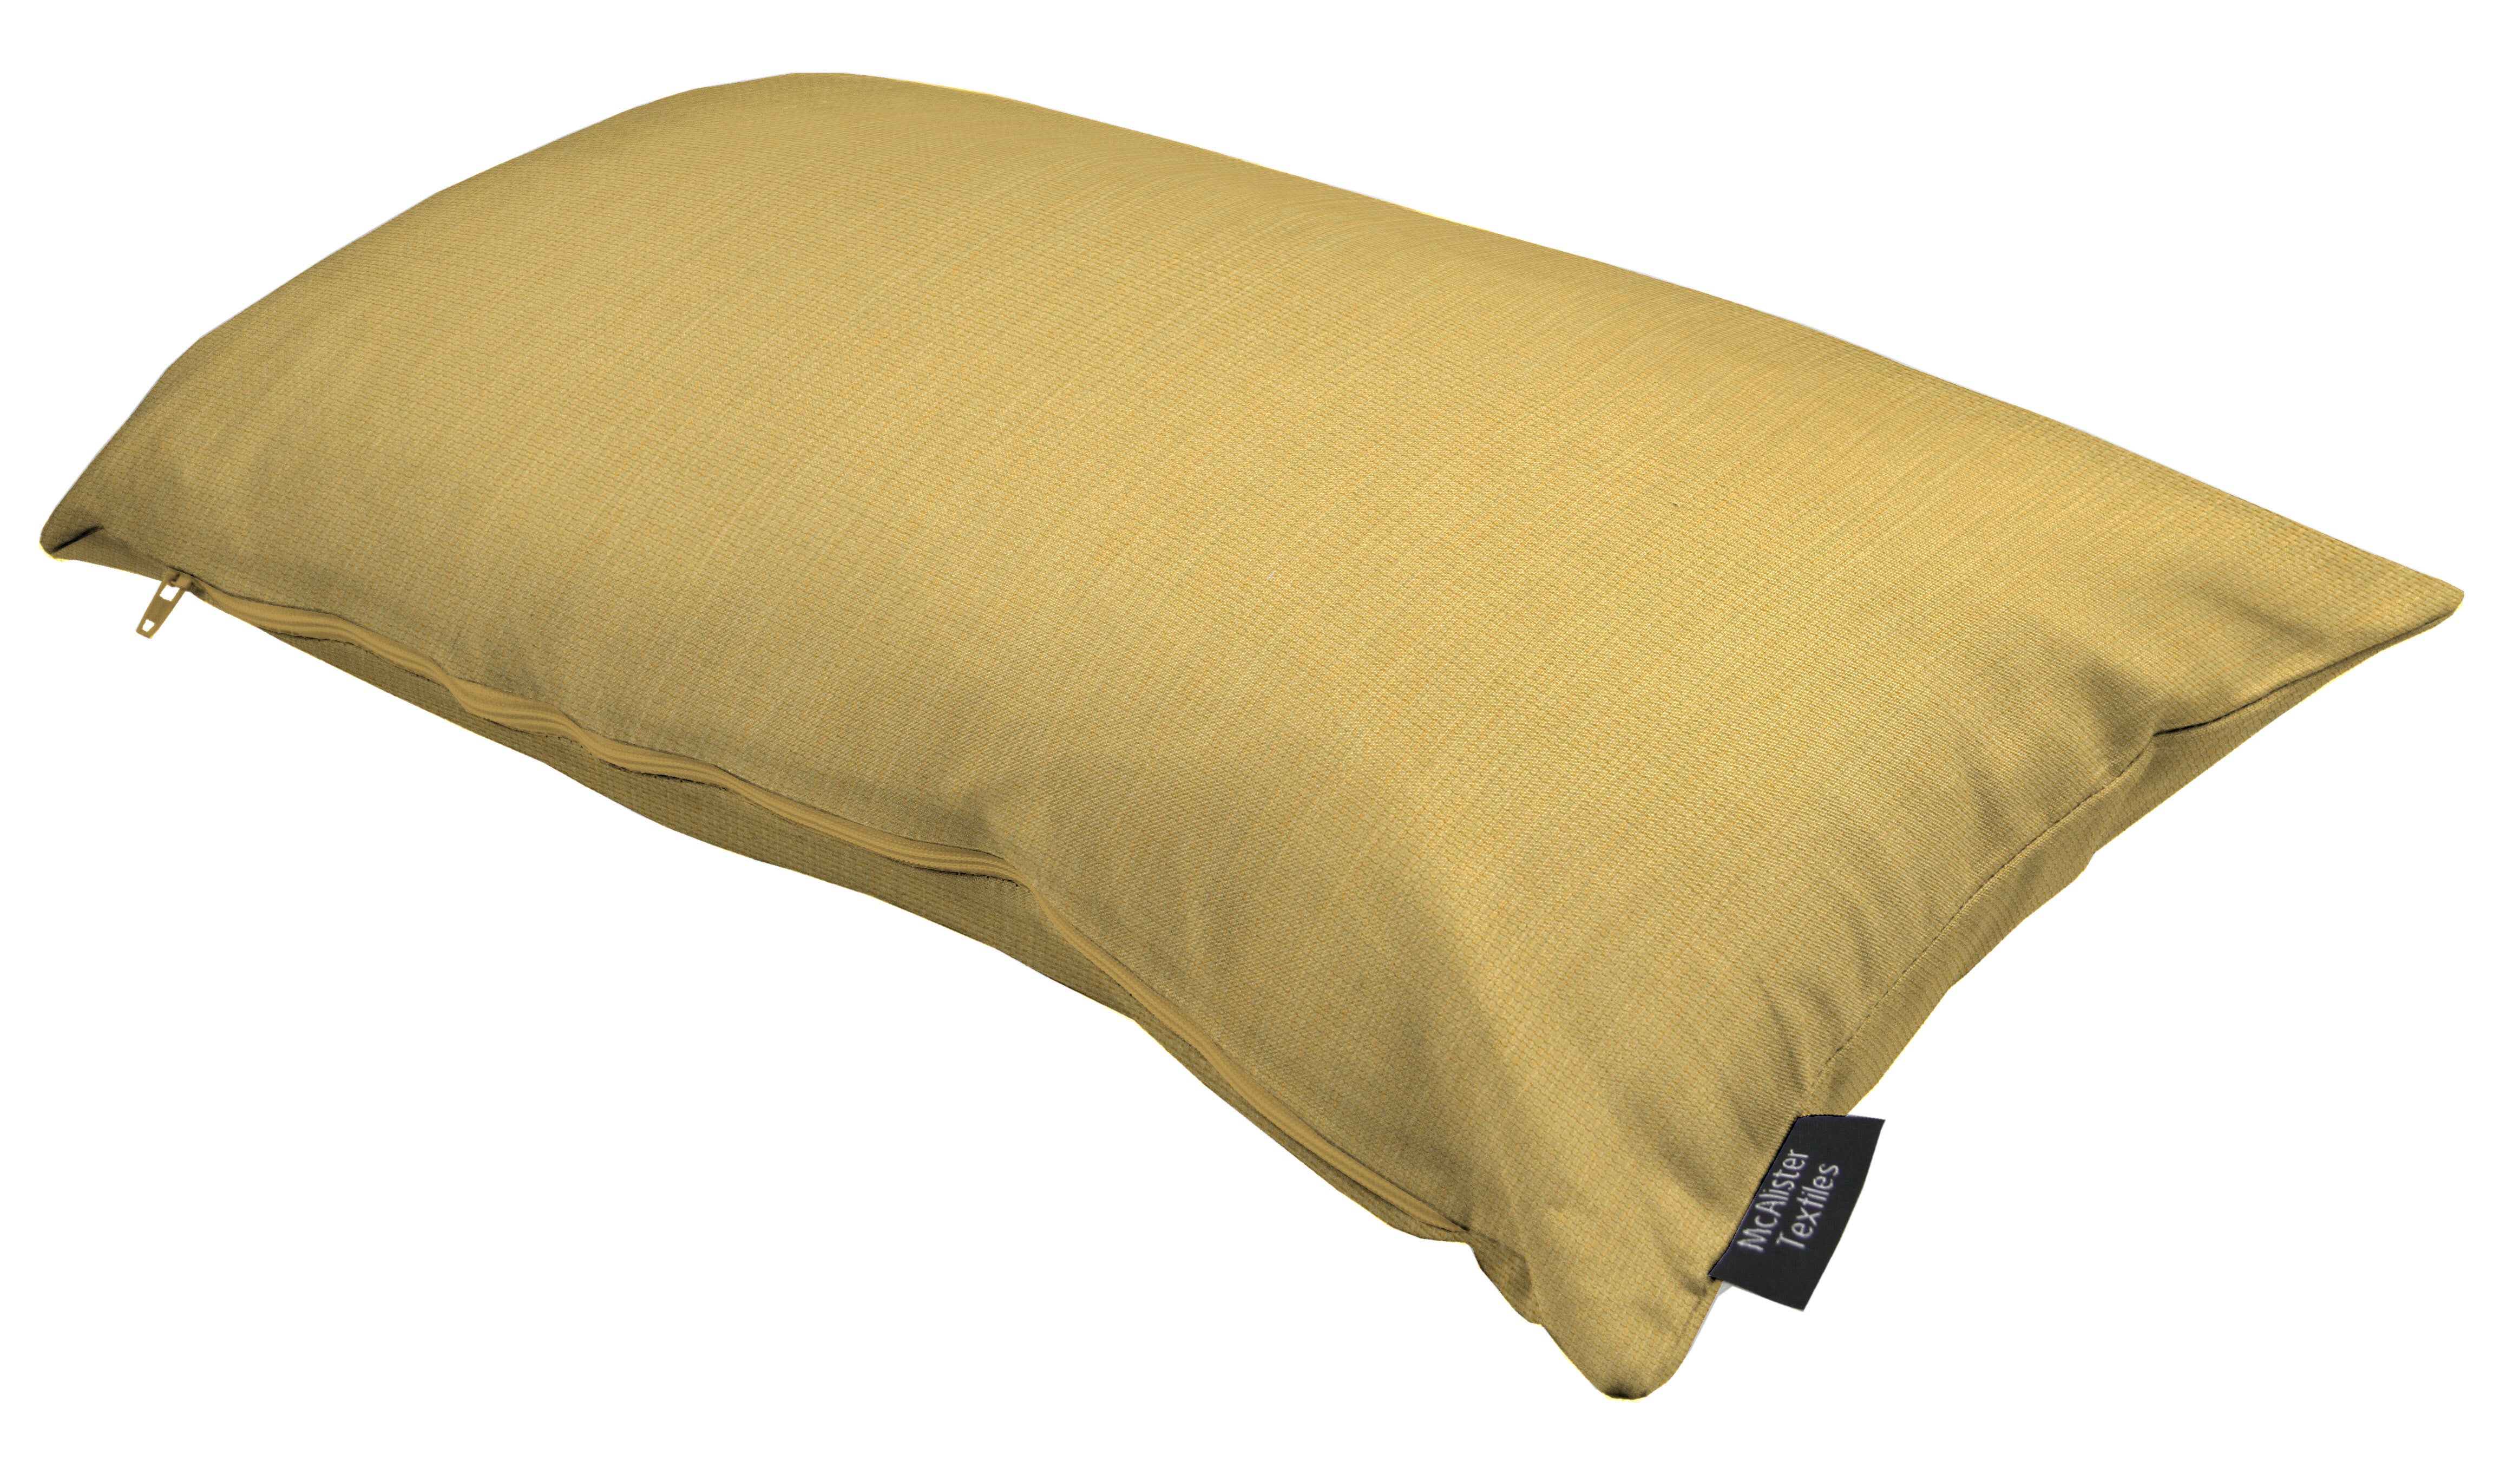 Capri Ochre Yellow Plain Cushion